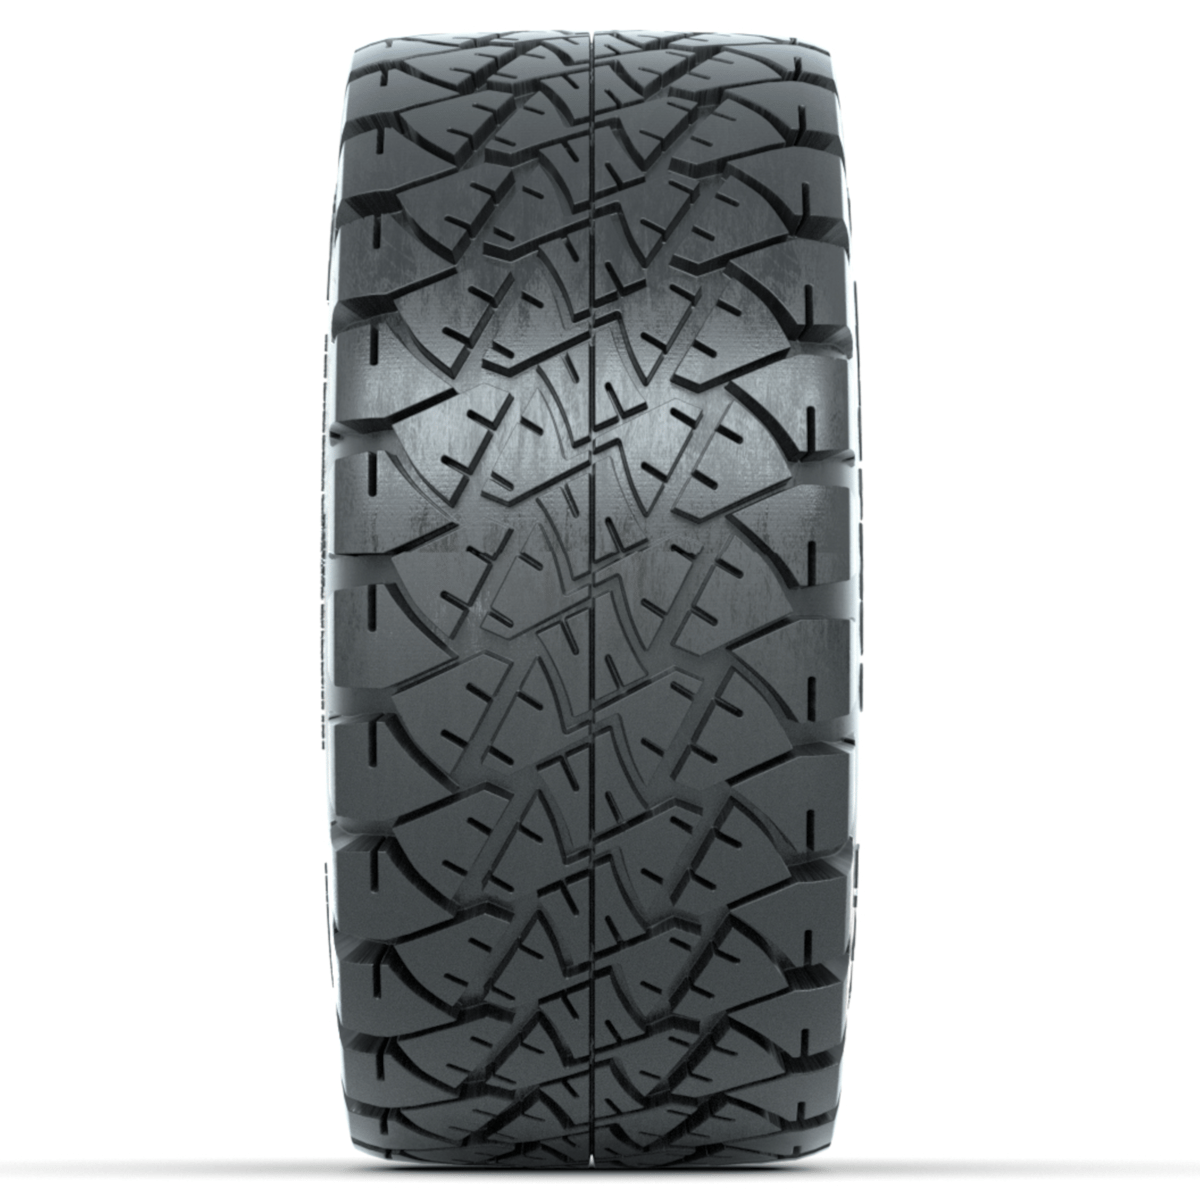 22x10-10 GTW&reg; Timberwolf A/T Tire